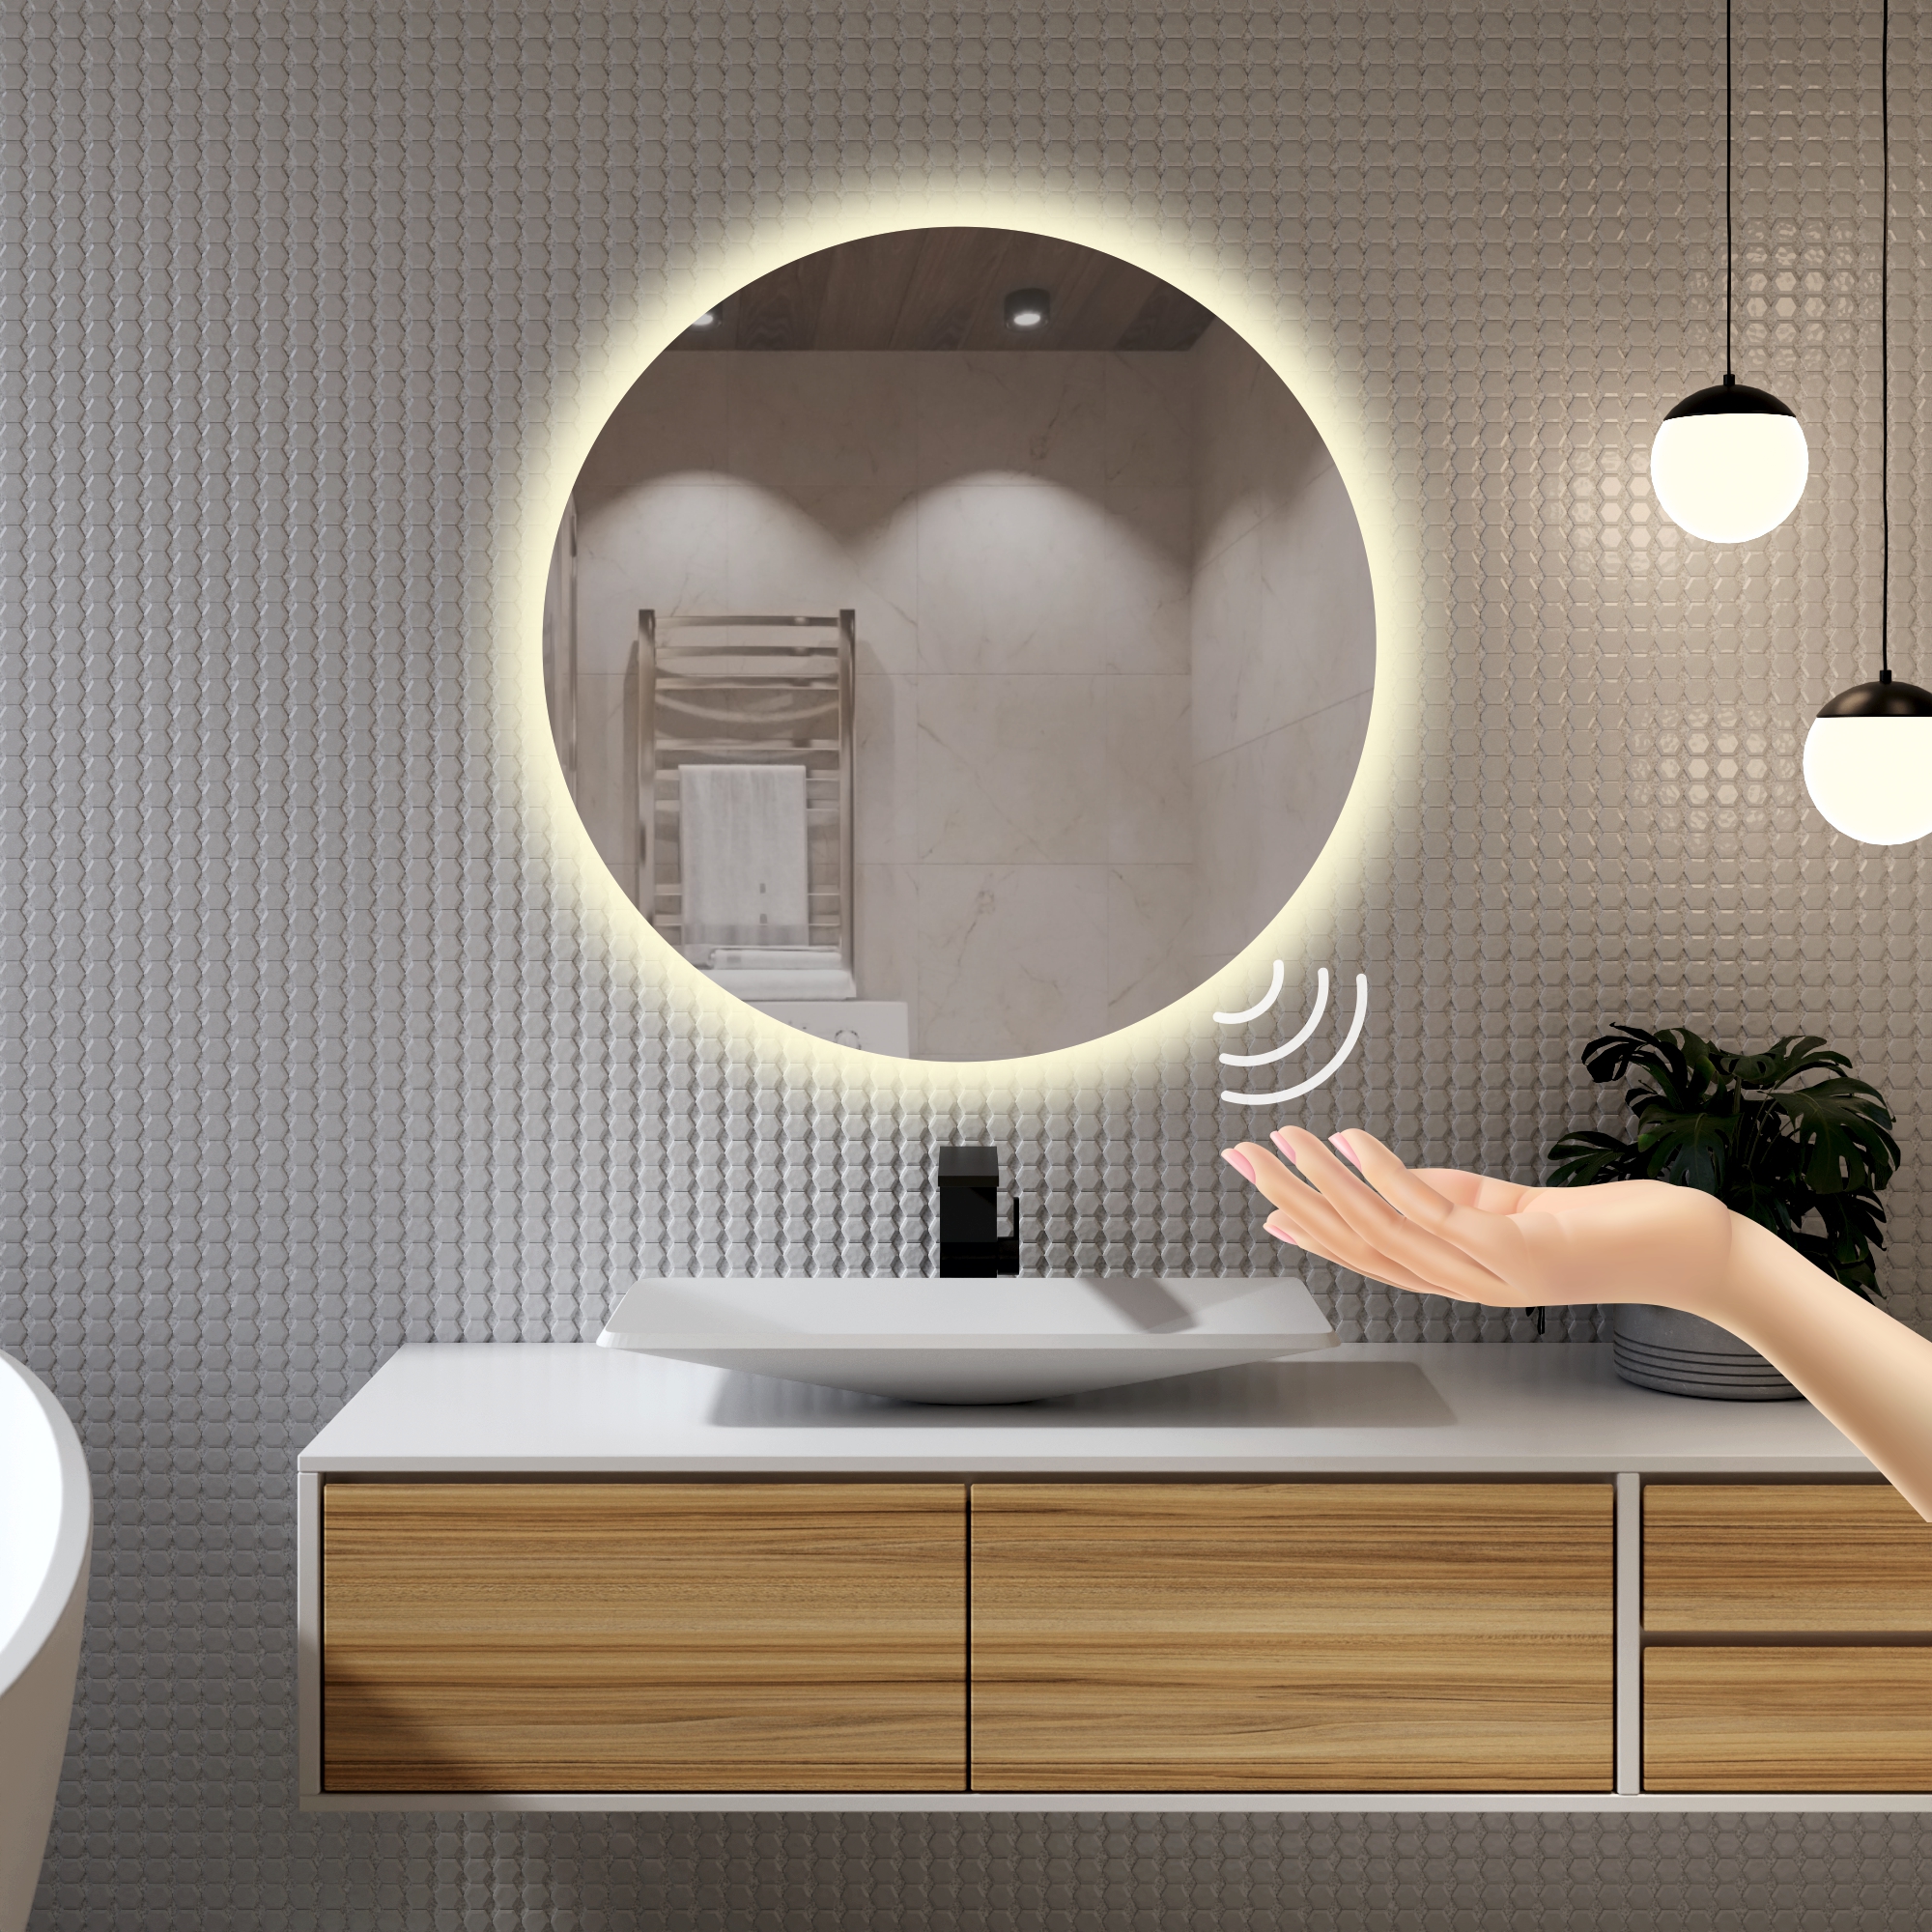 Зеркало для ванной Alfa Mirrors с дневной подсветкой 4200К круглое 70см, арт. Na-7Vzd зеркало silver mirrors